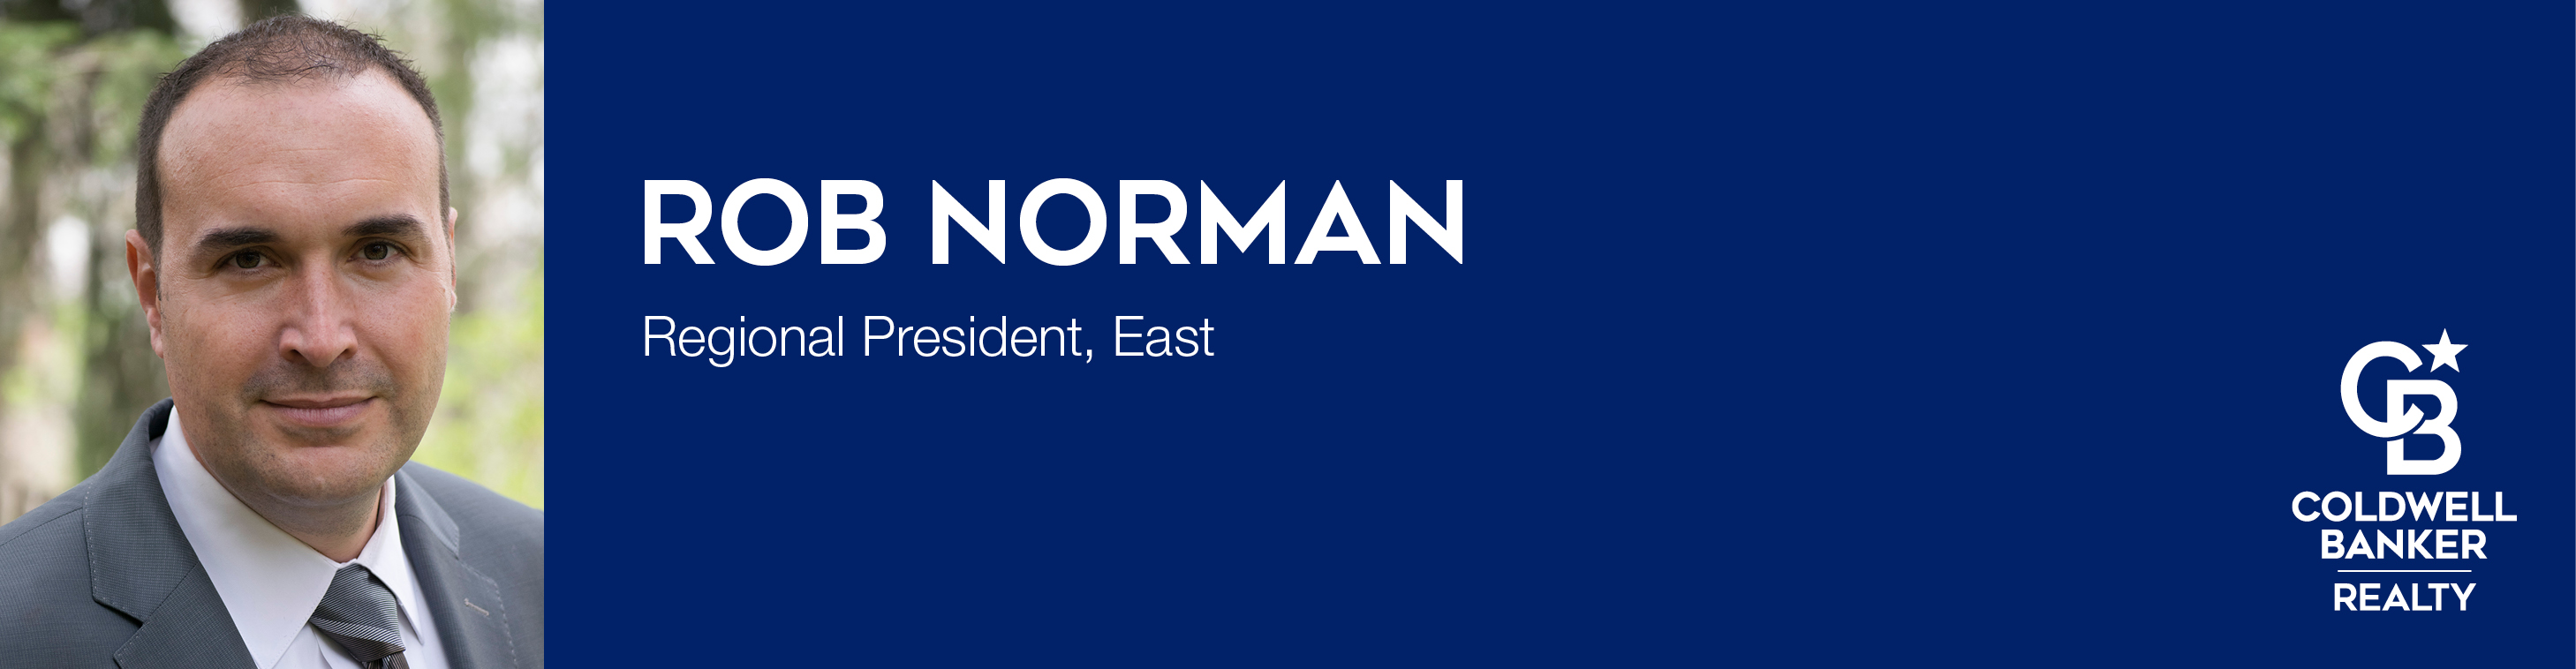 Rob Norman, Regional President